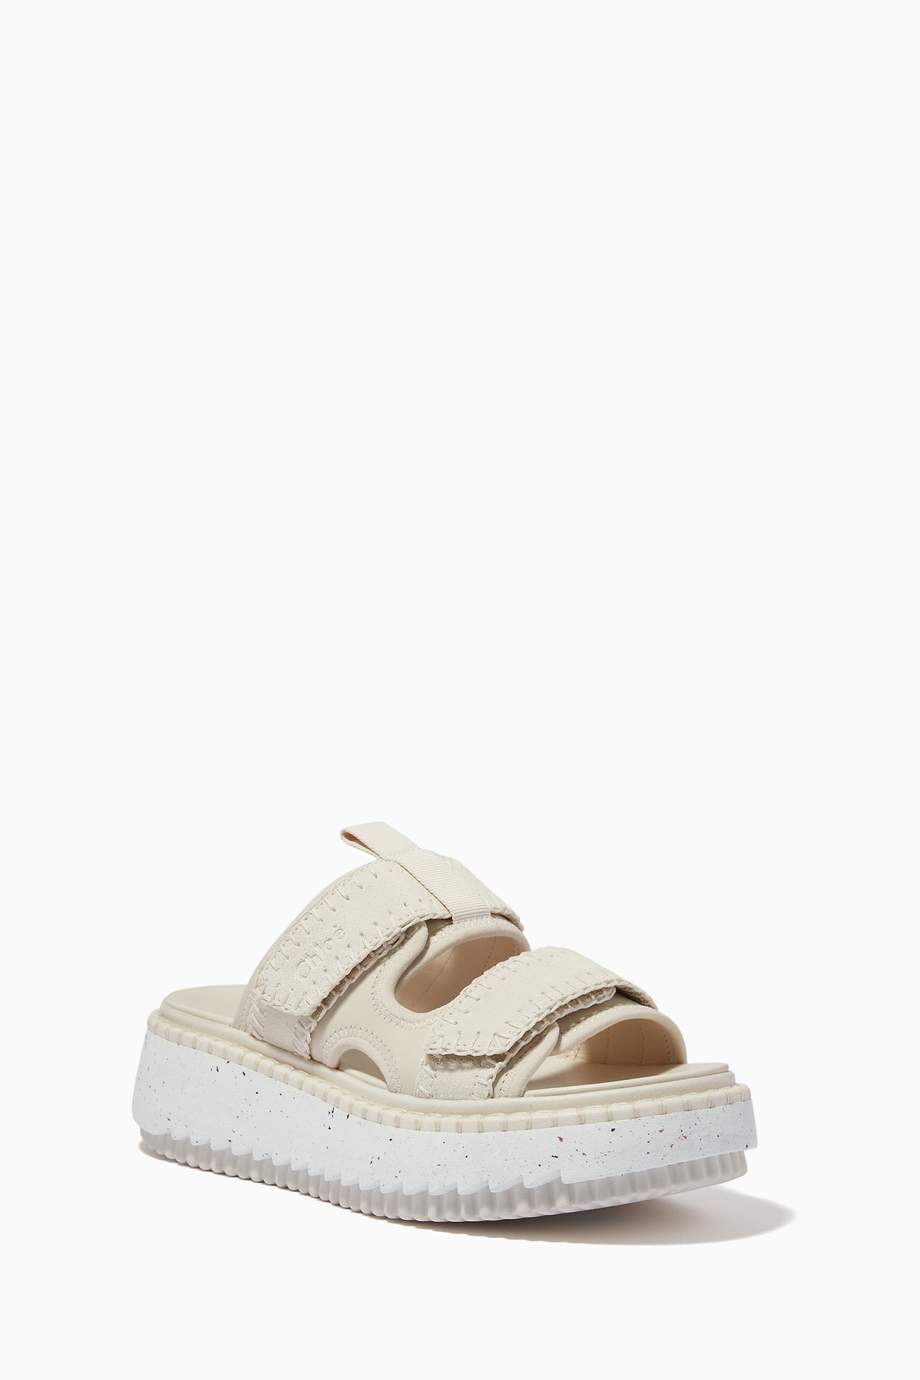 Shop Chloé White Lilli Platform Slide Sandals in Leather for Women ...